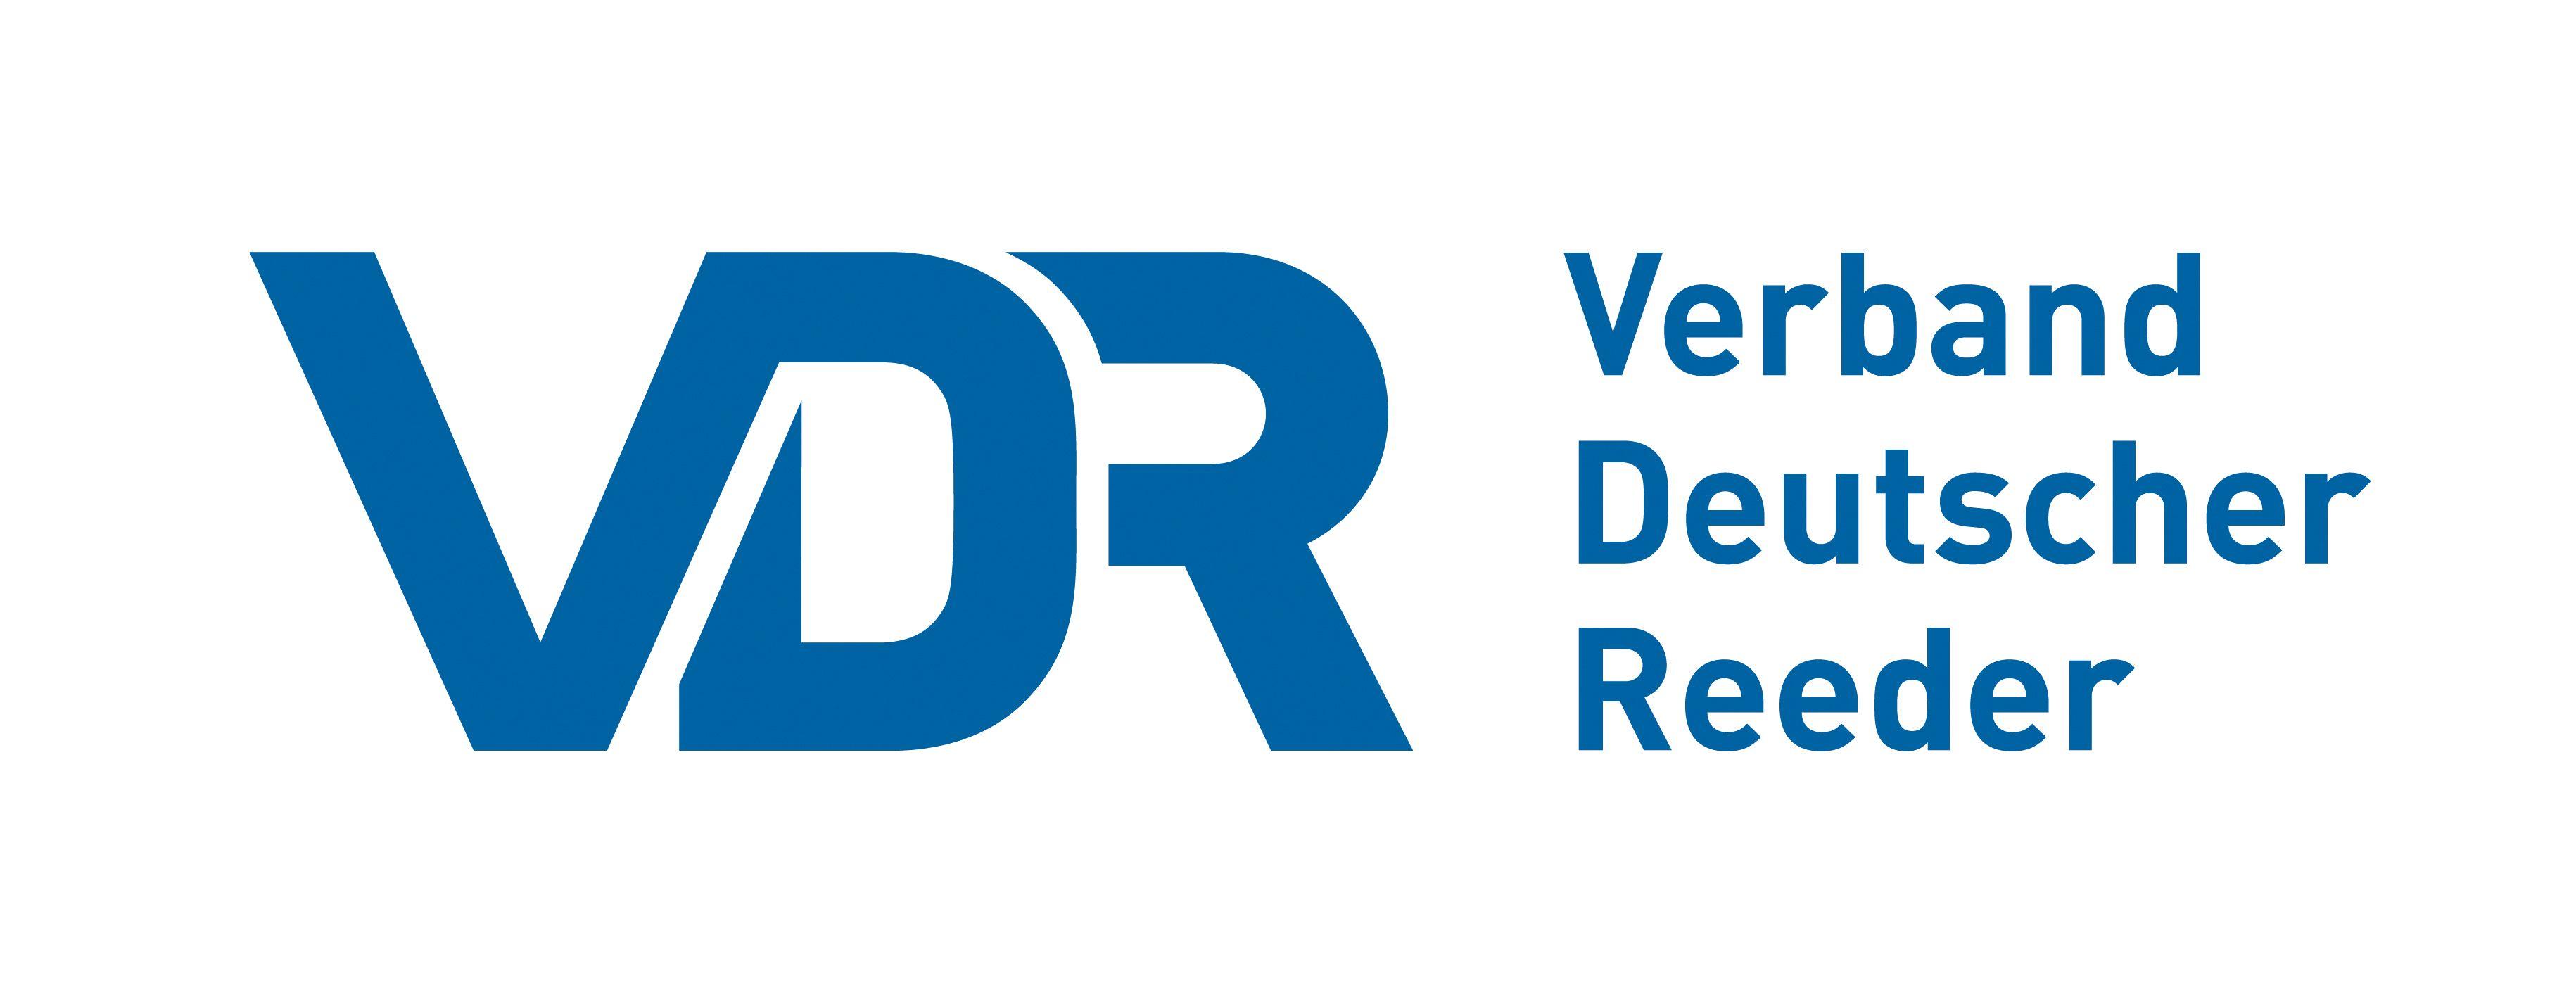 Deutsch Logo - File:VDR-Logo Deutsch RGB.jpg - Wikimedia Commons